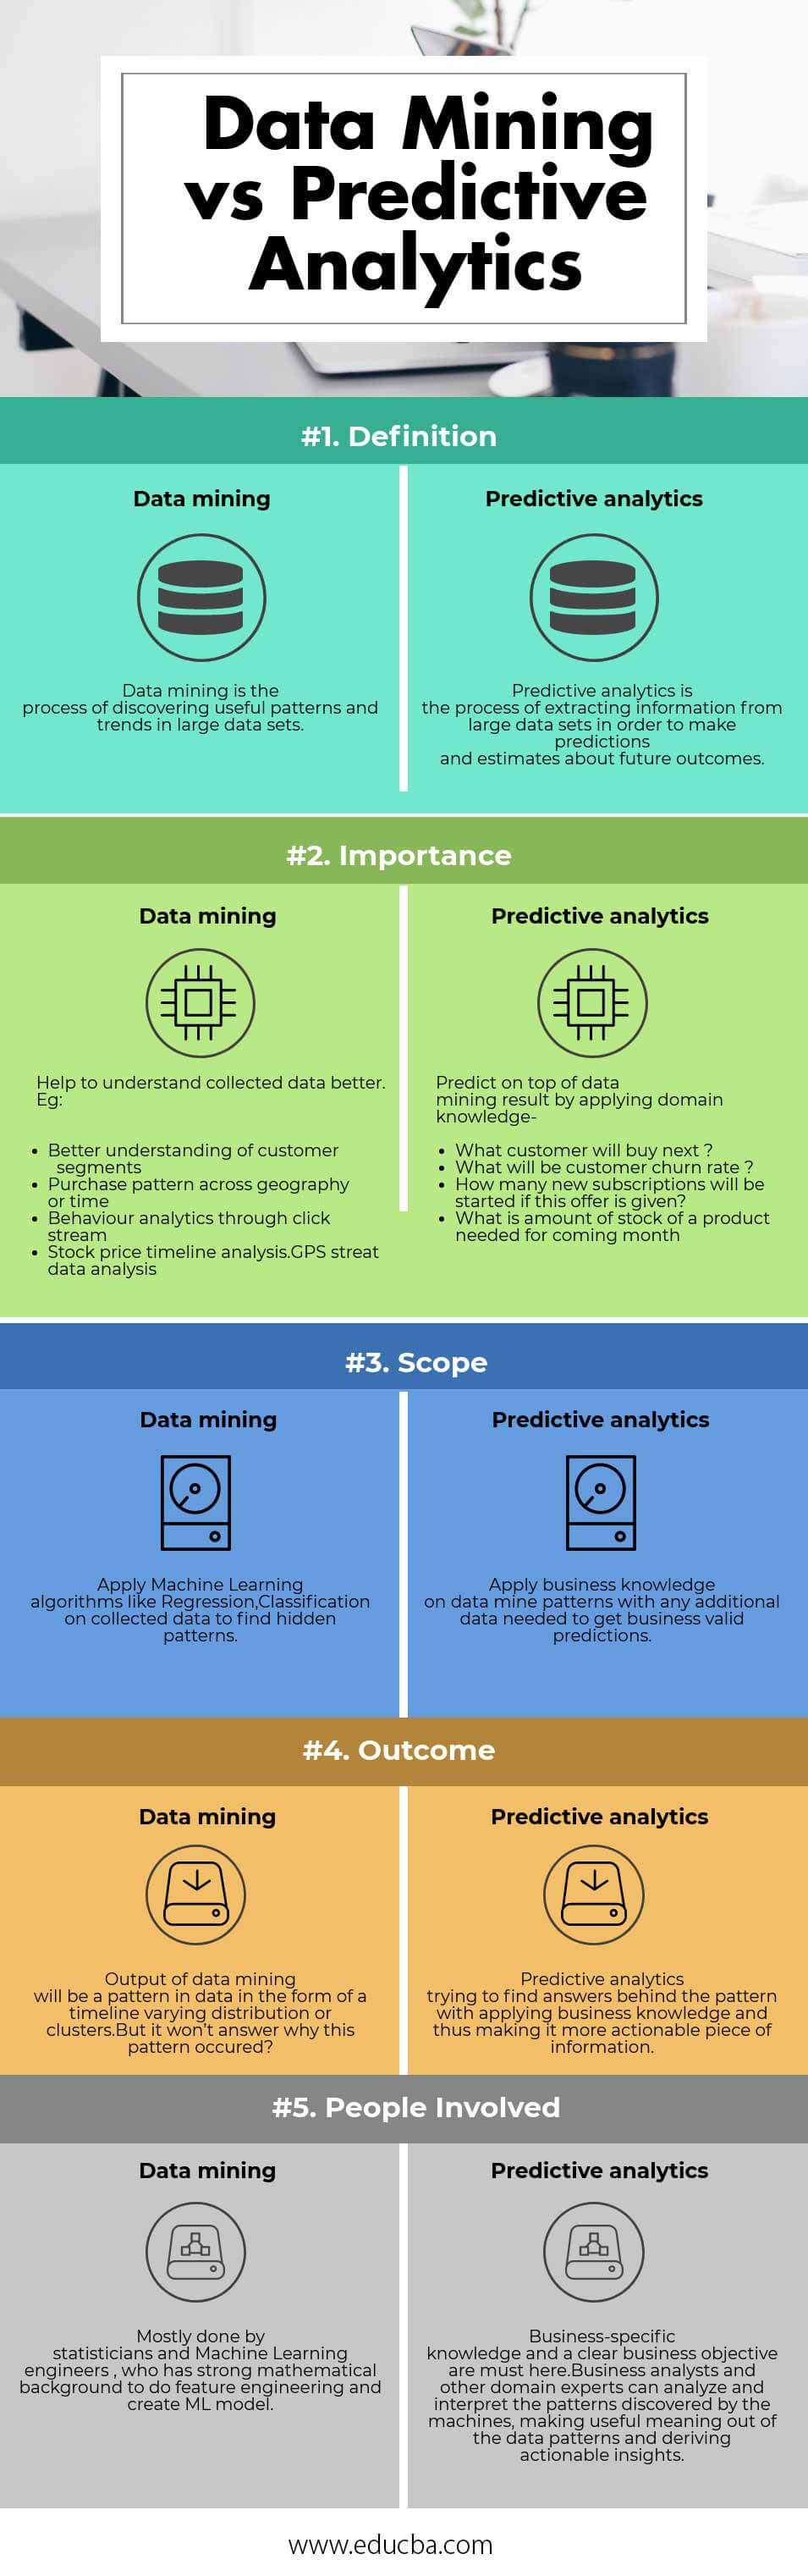 Predictive Analytics vs Data Mining